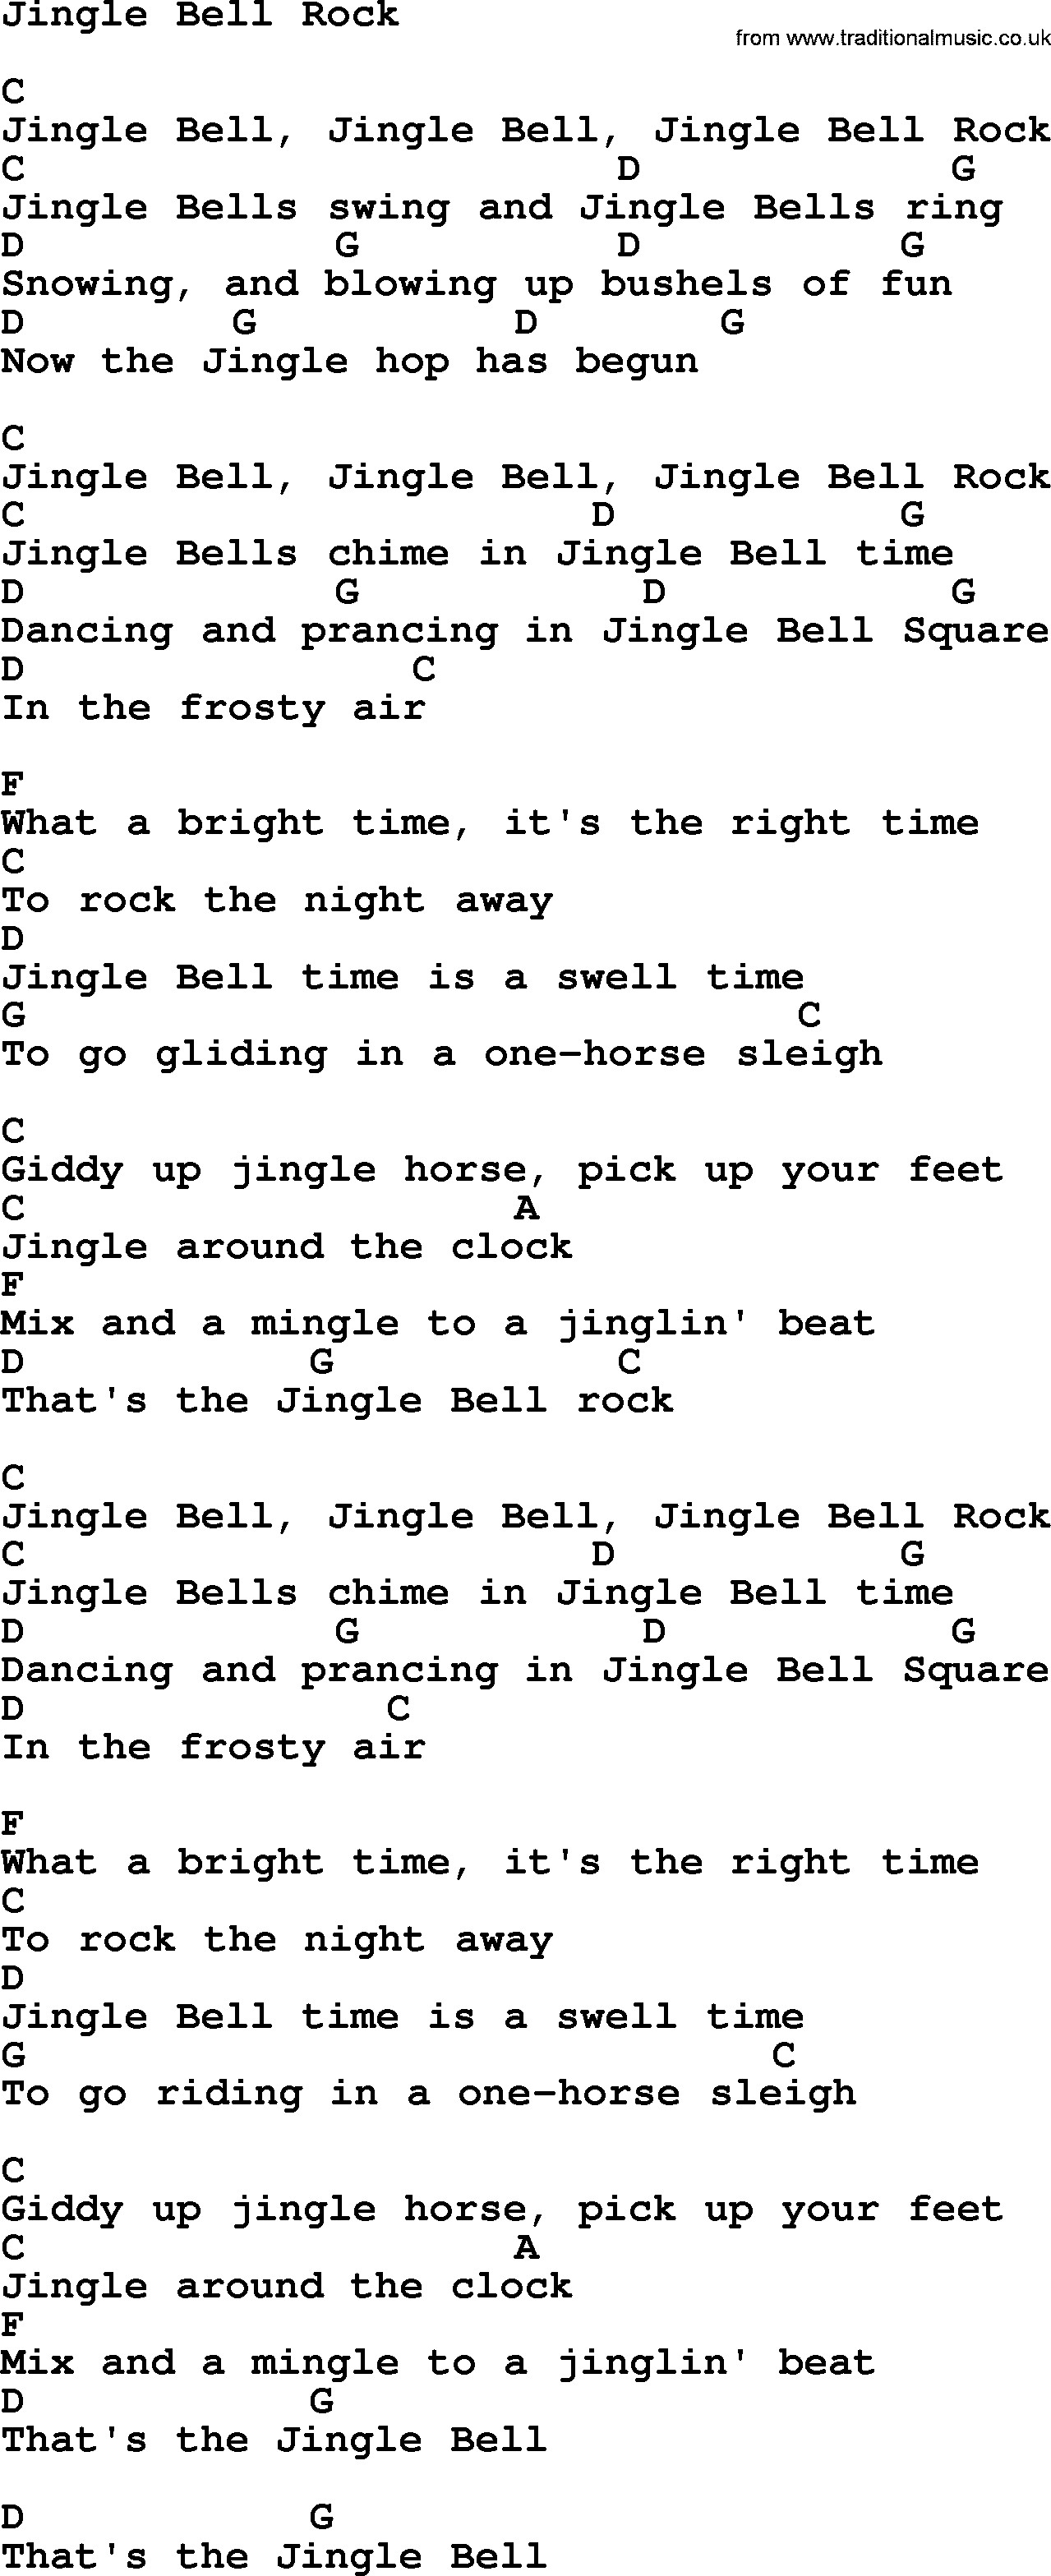 George Strait Christmas Cookies Lyrics
 George Strait song Jingle Bell Rock lyrics and chords